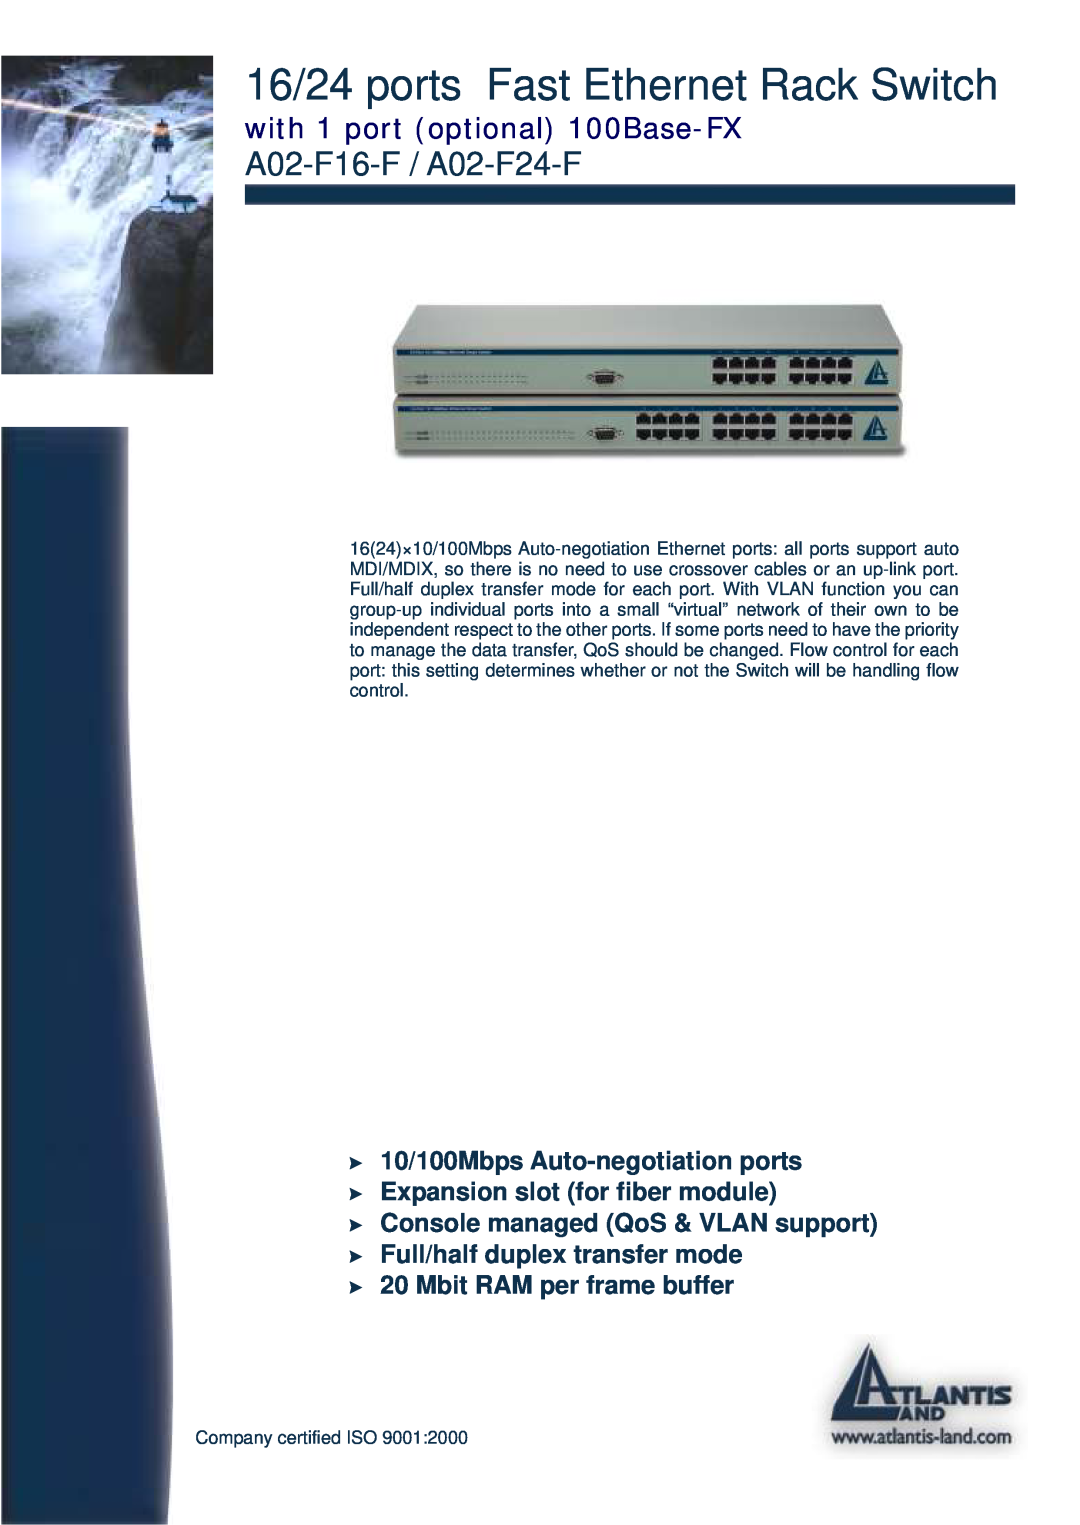 Atlantis Land manual A02-F16-F / A02-F24-F, with 1 port optional 100Base-FX, 16/24 ports Fast Ethernet Rack Switch 